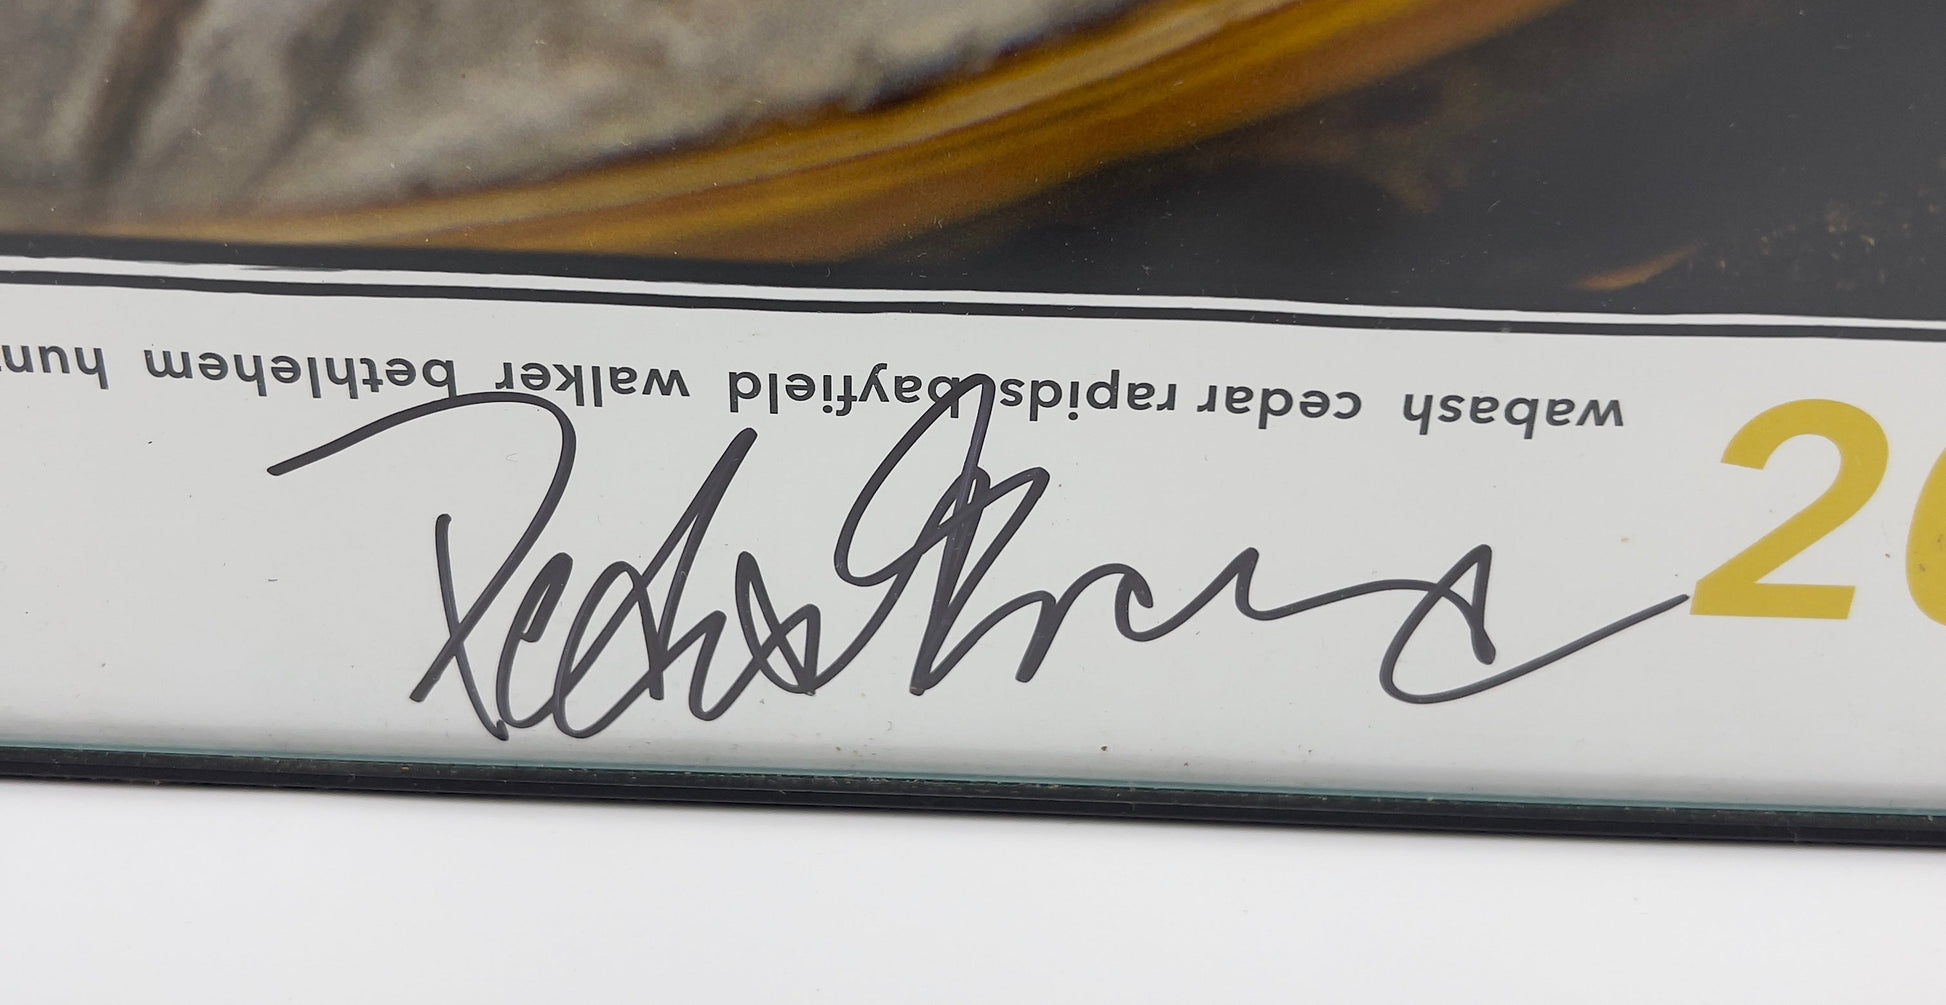 Framed Peter Frampton Autograph on 2015 Tour Poster